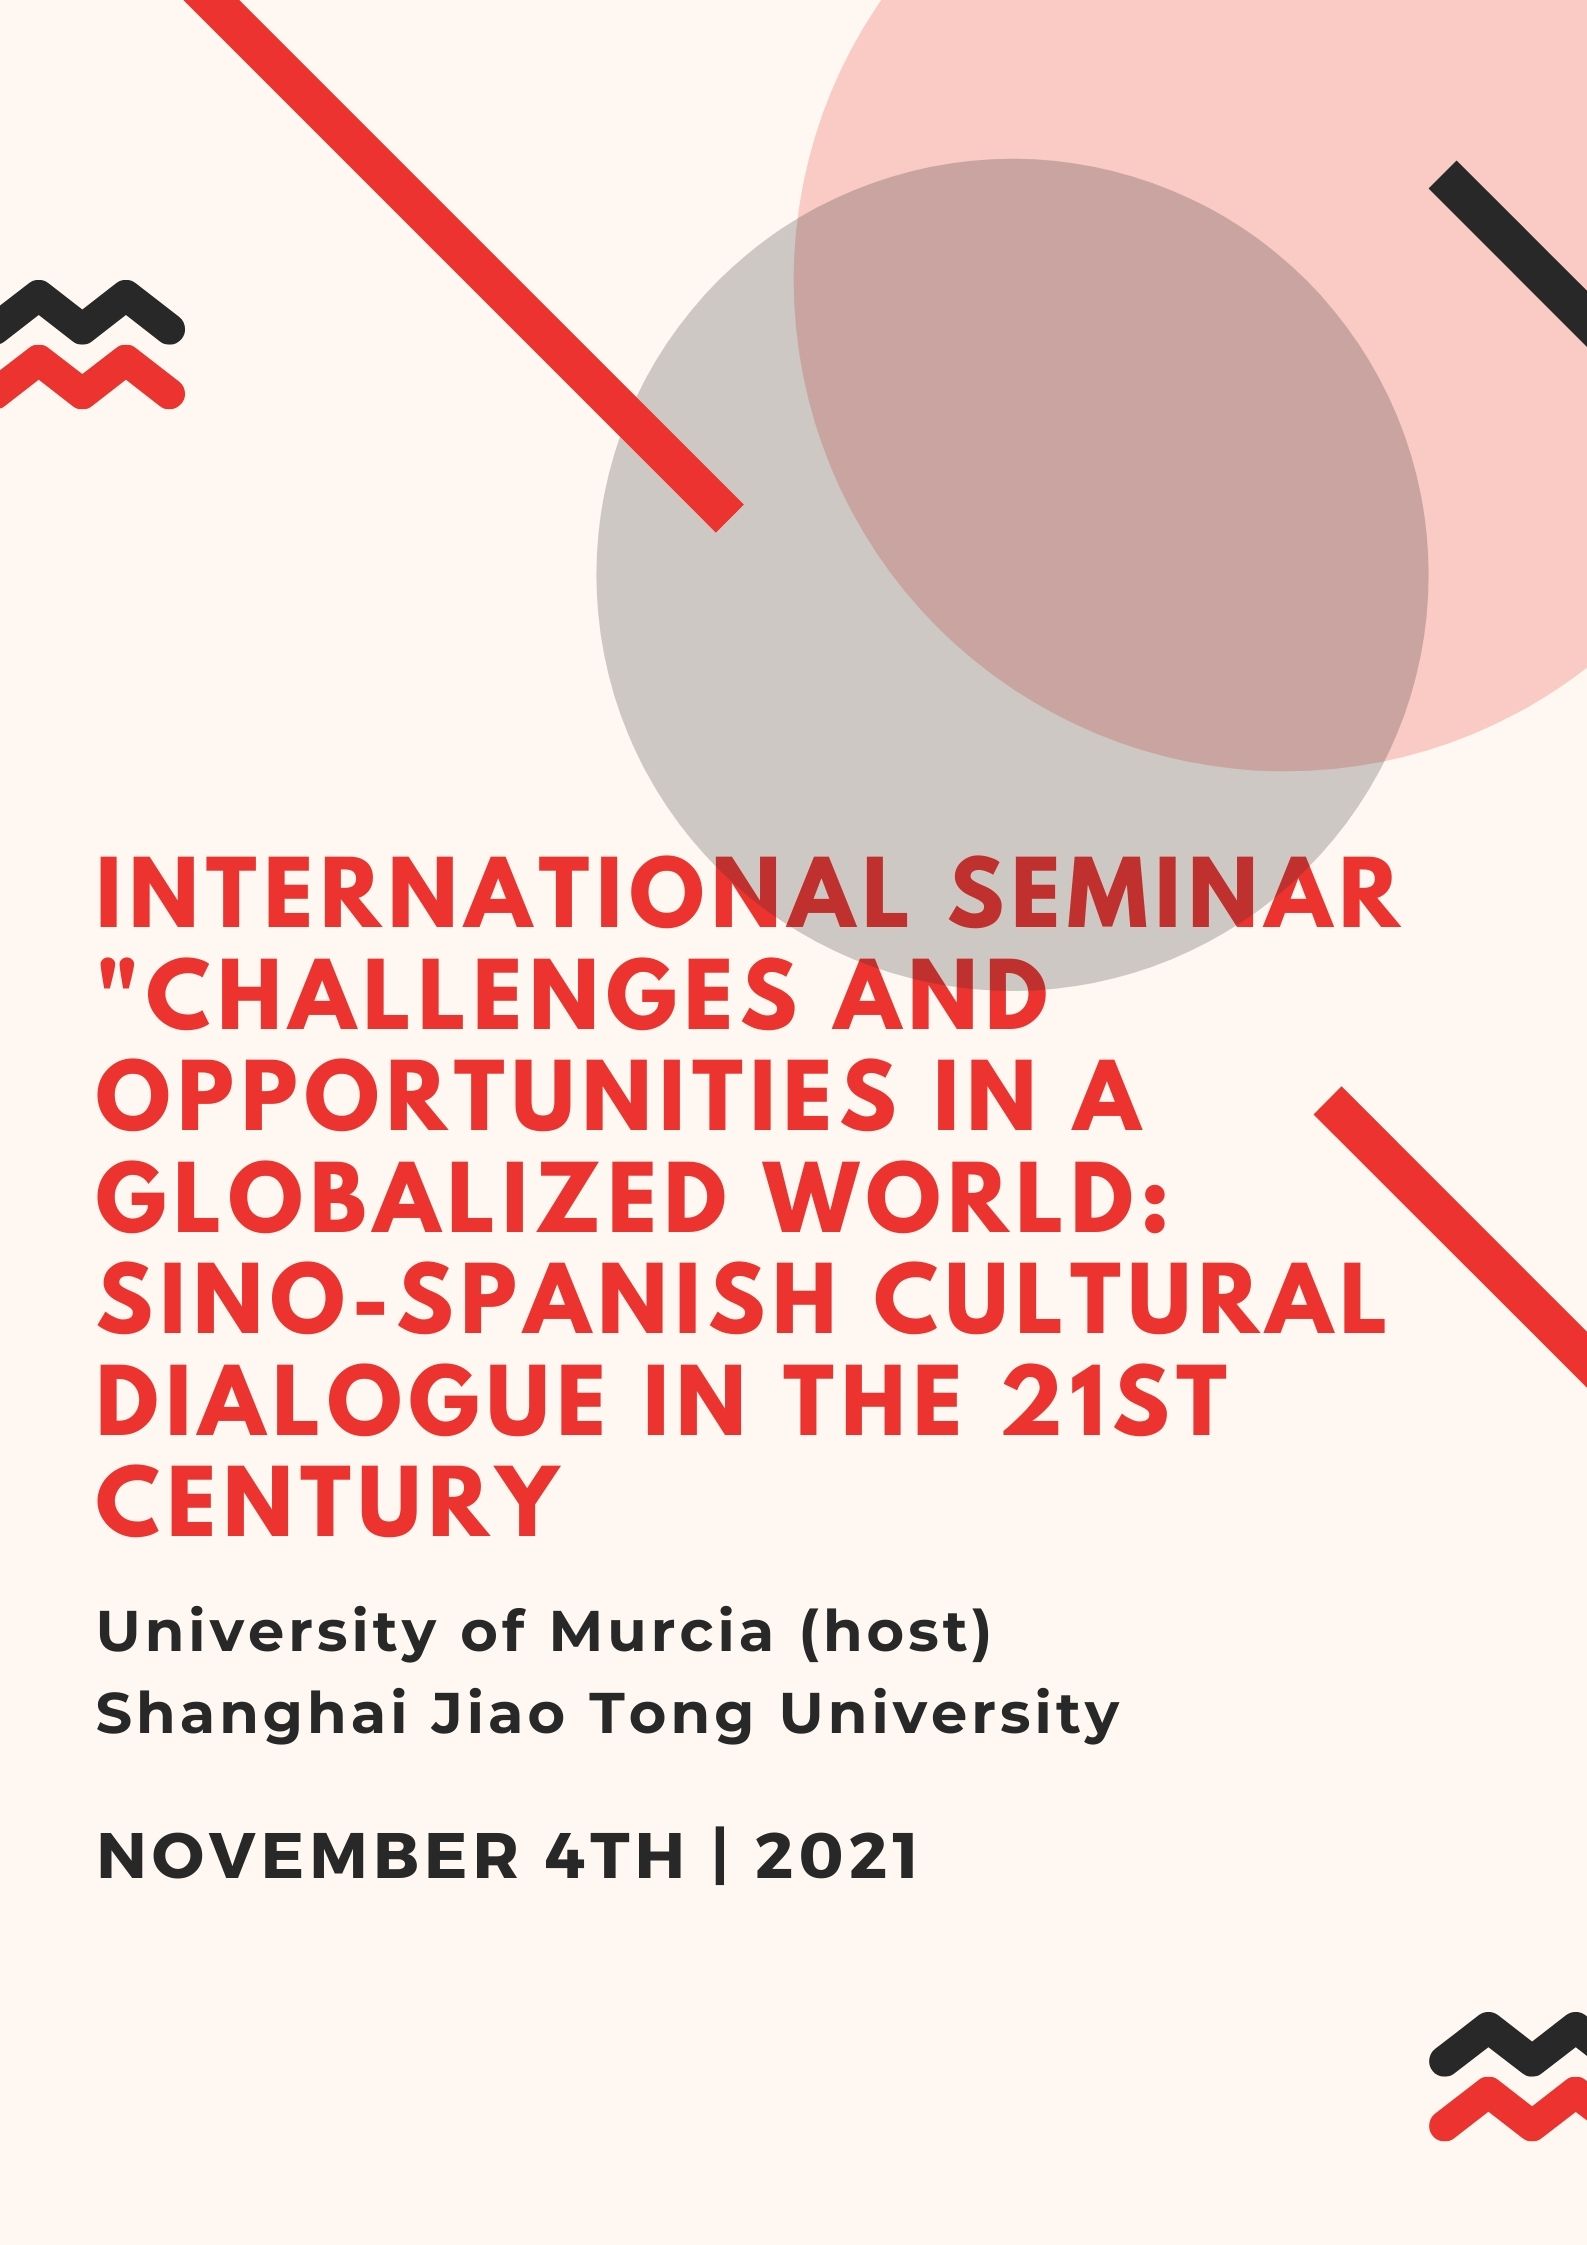 Celebrado el Seminario Internacional “Challenges and Opportunities in a Globalized World: Sino-Spanish Cultural Dialogue in the 21st Century” de la UMU y la Shanghai Jiao Tong University